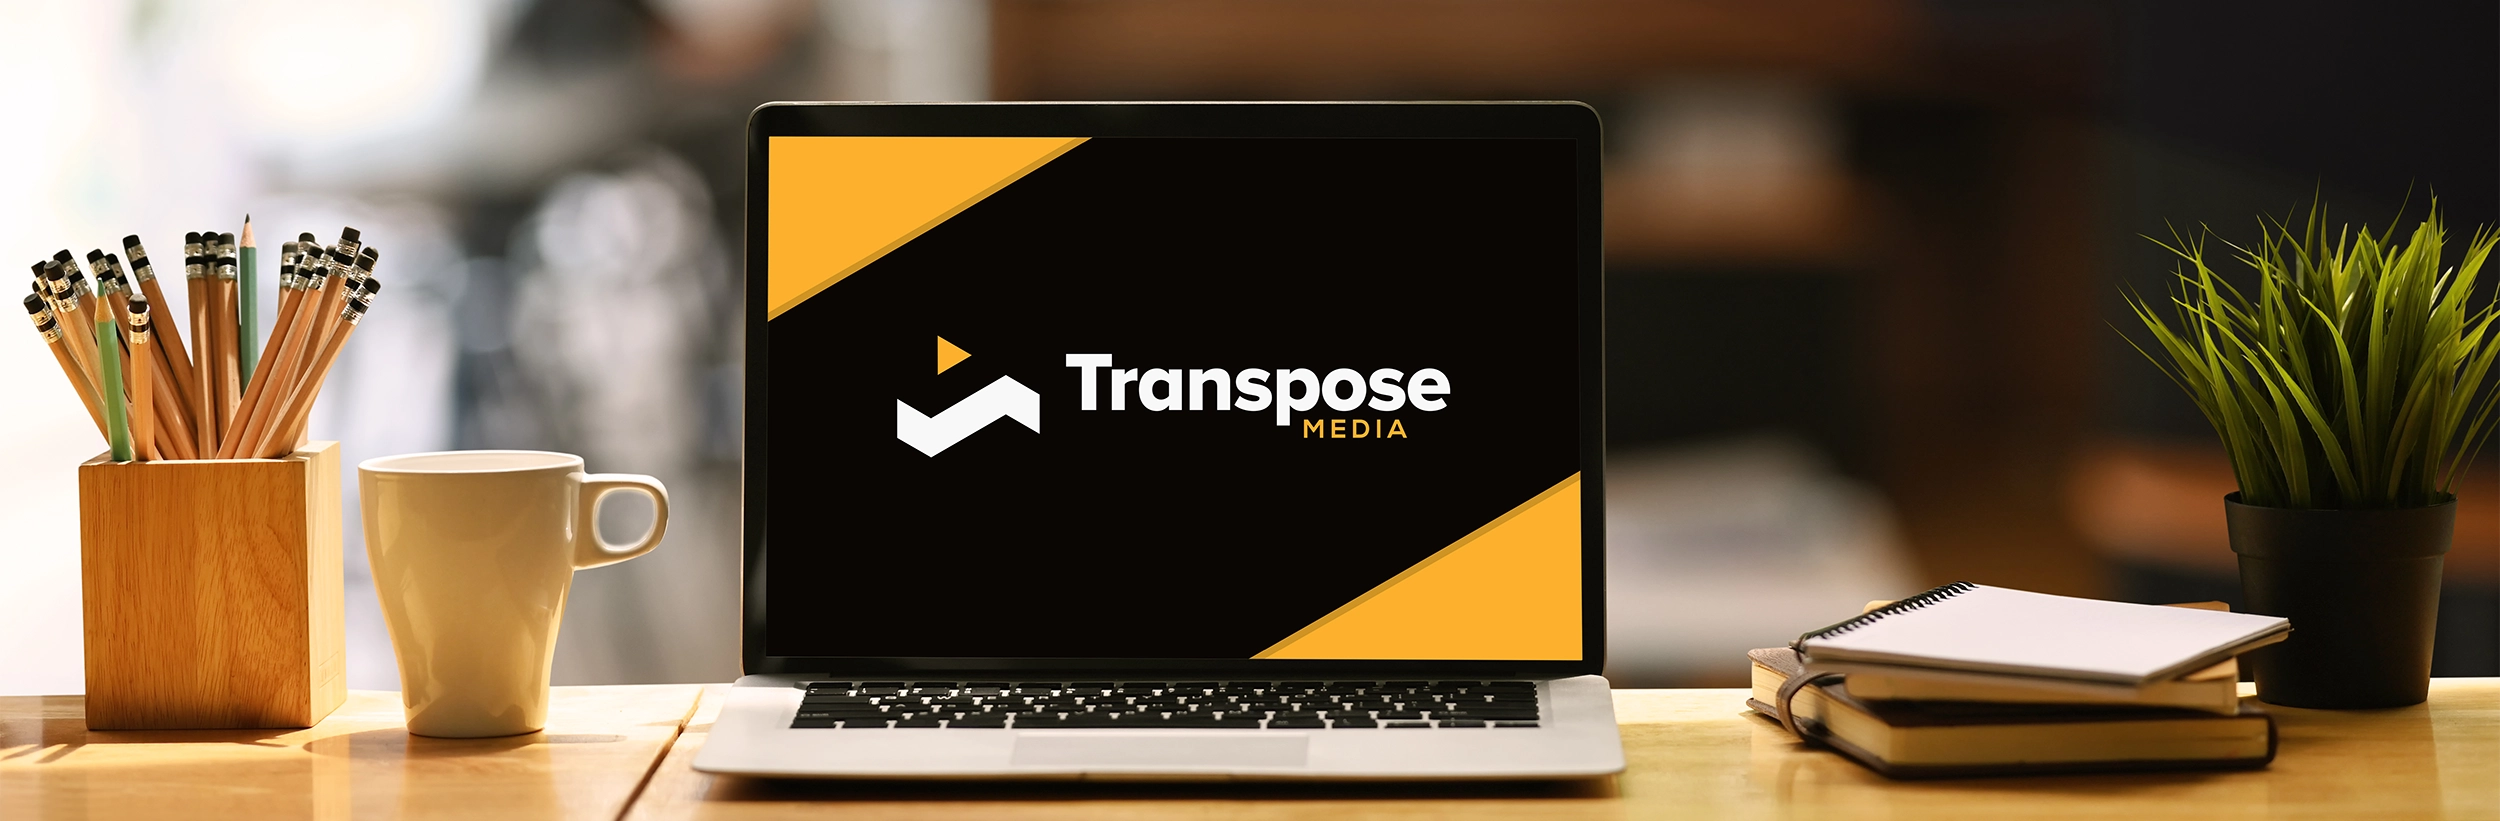 Transpose Media logo on laptop